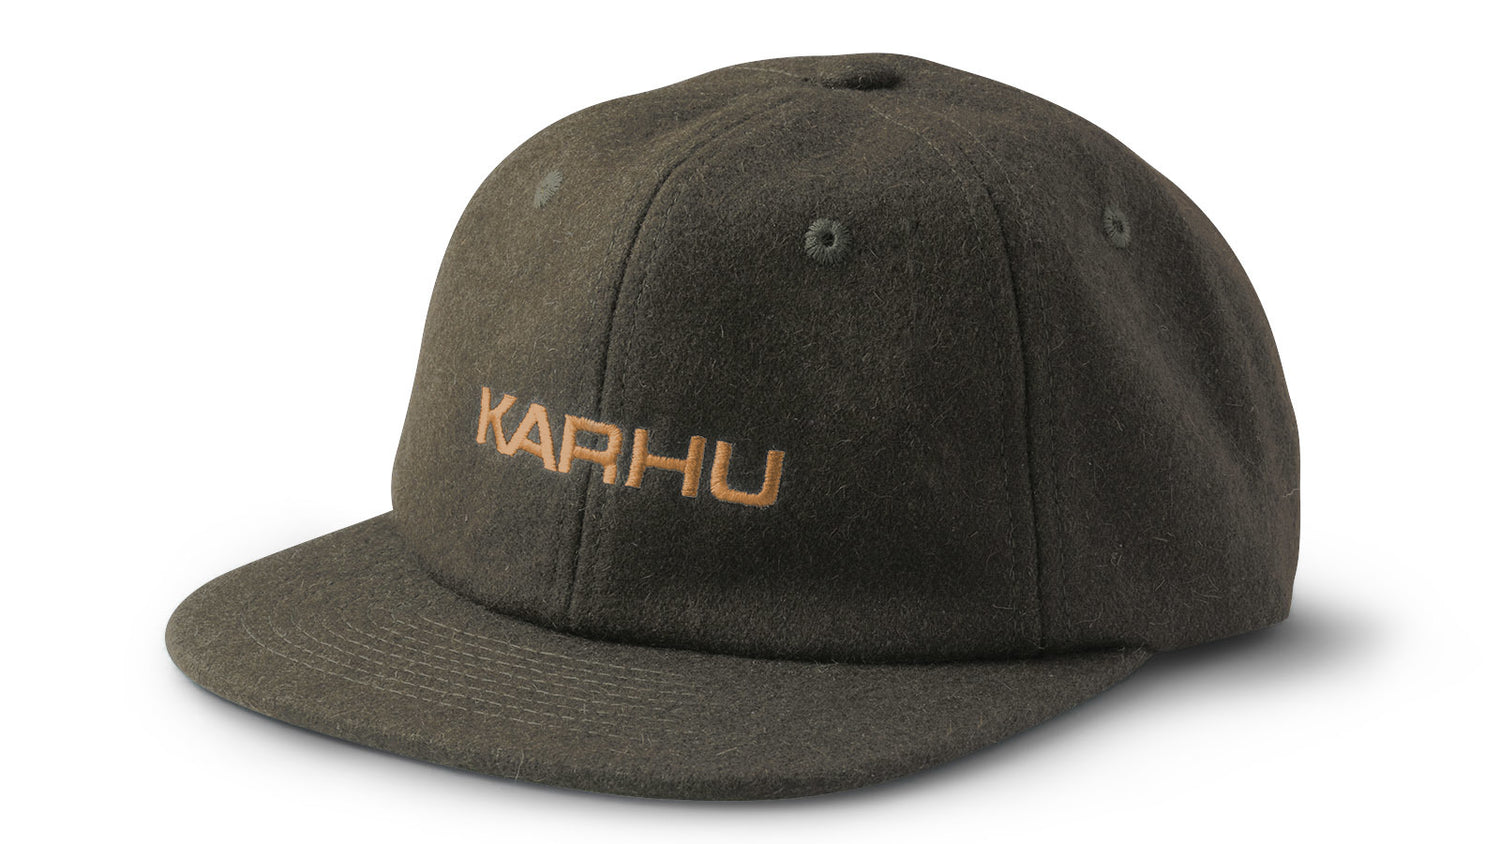 Karhu logo cap - dark olive / brown sugar